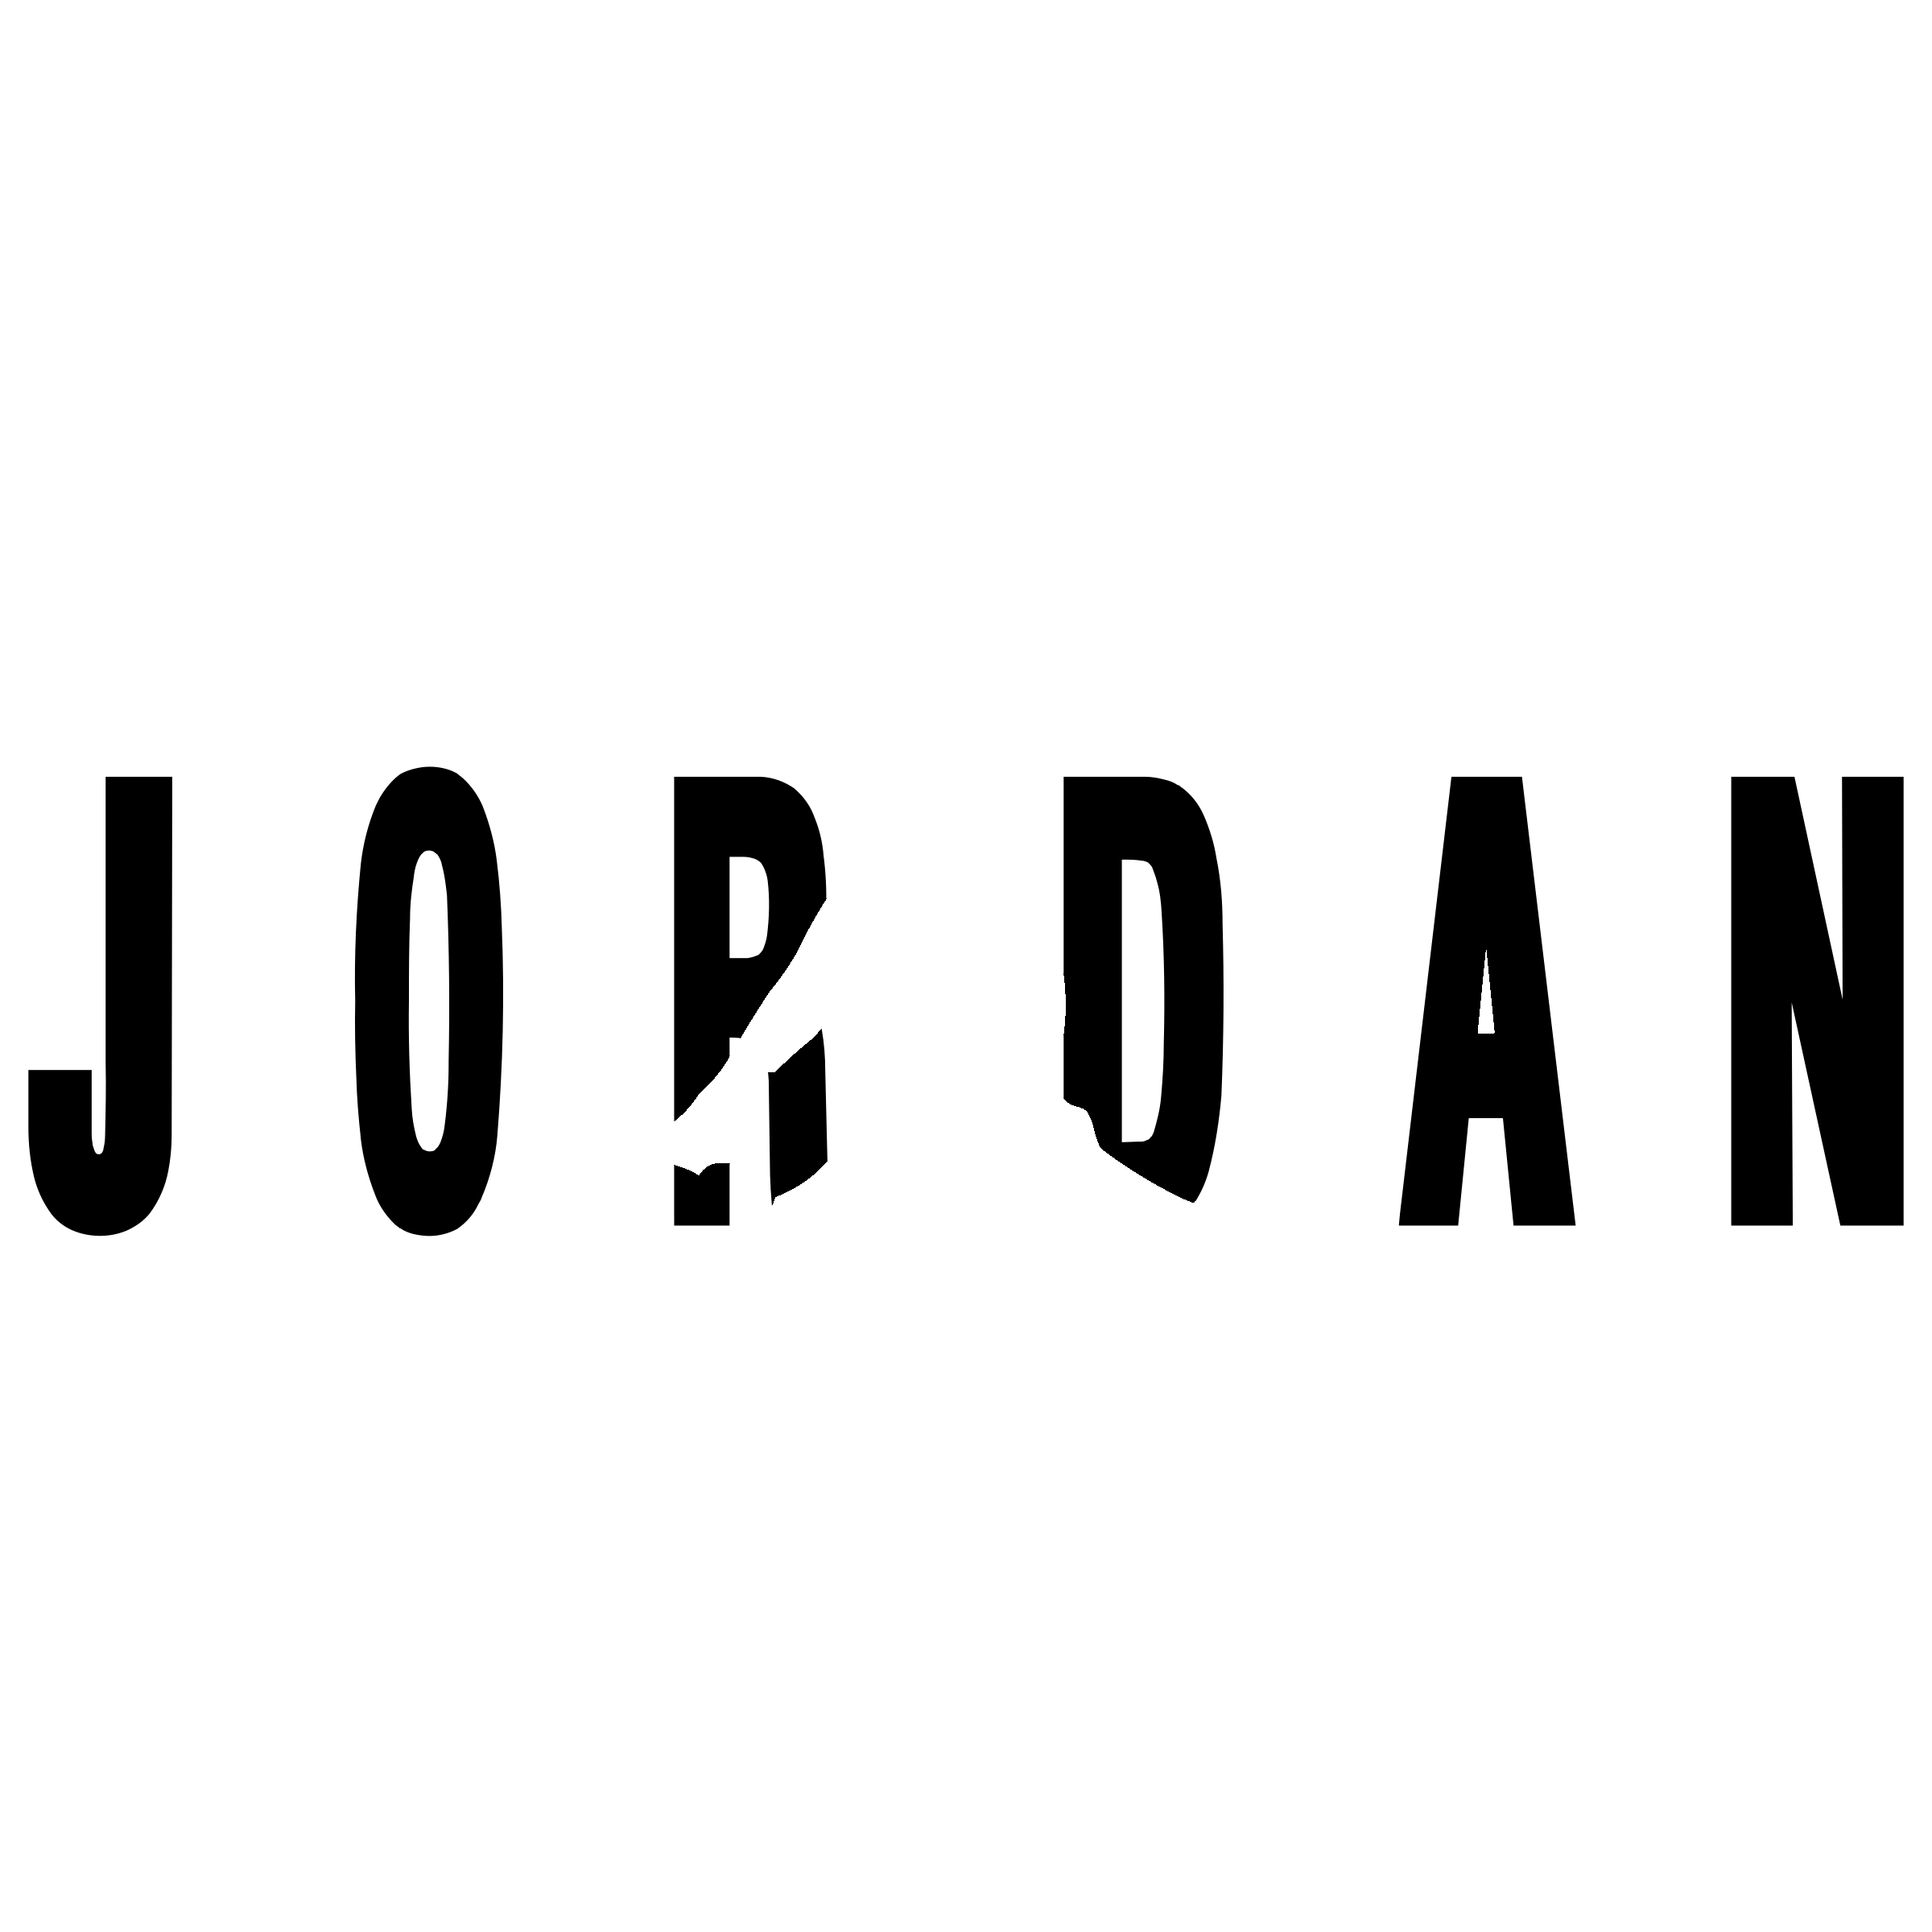 Jordan Logo - Jordan Air Logo PNG Transparent & SVG Vector